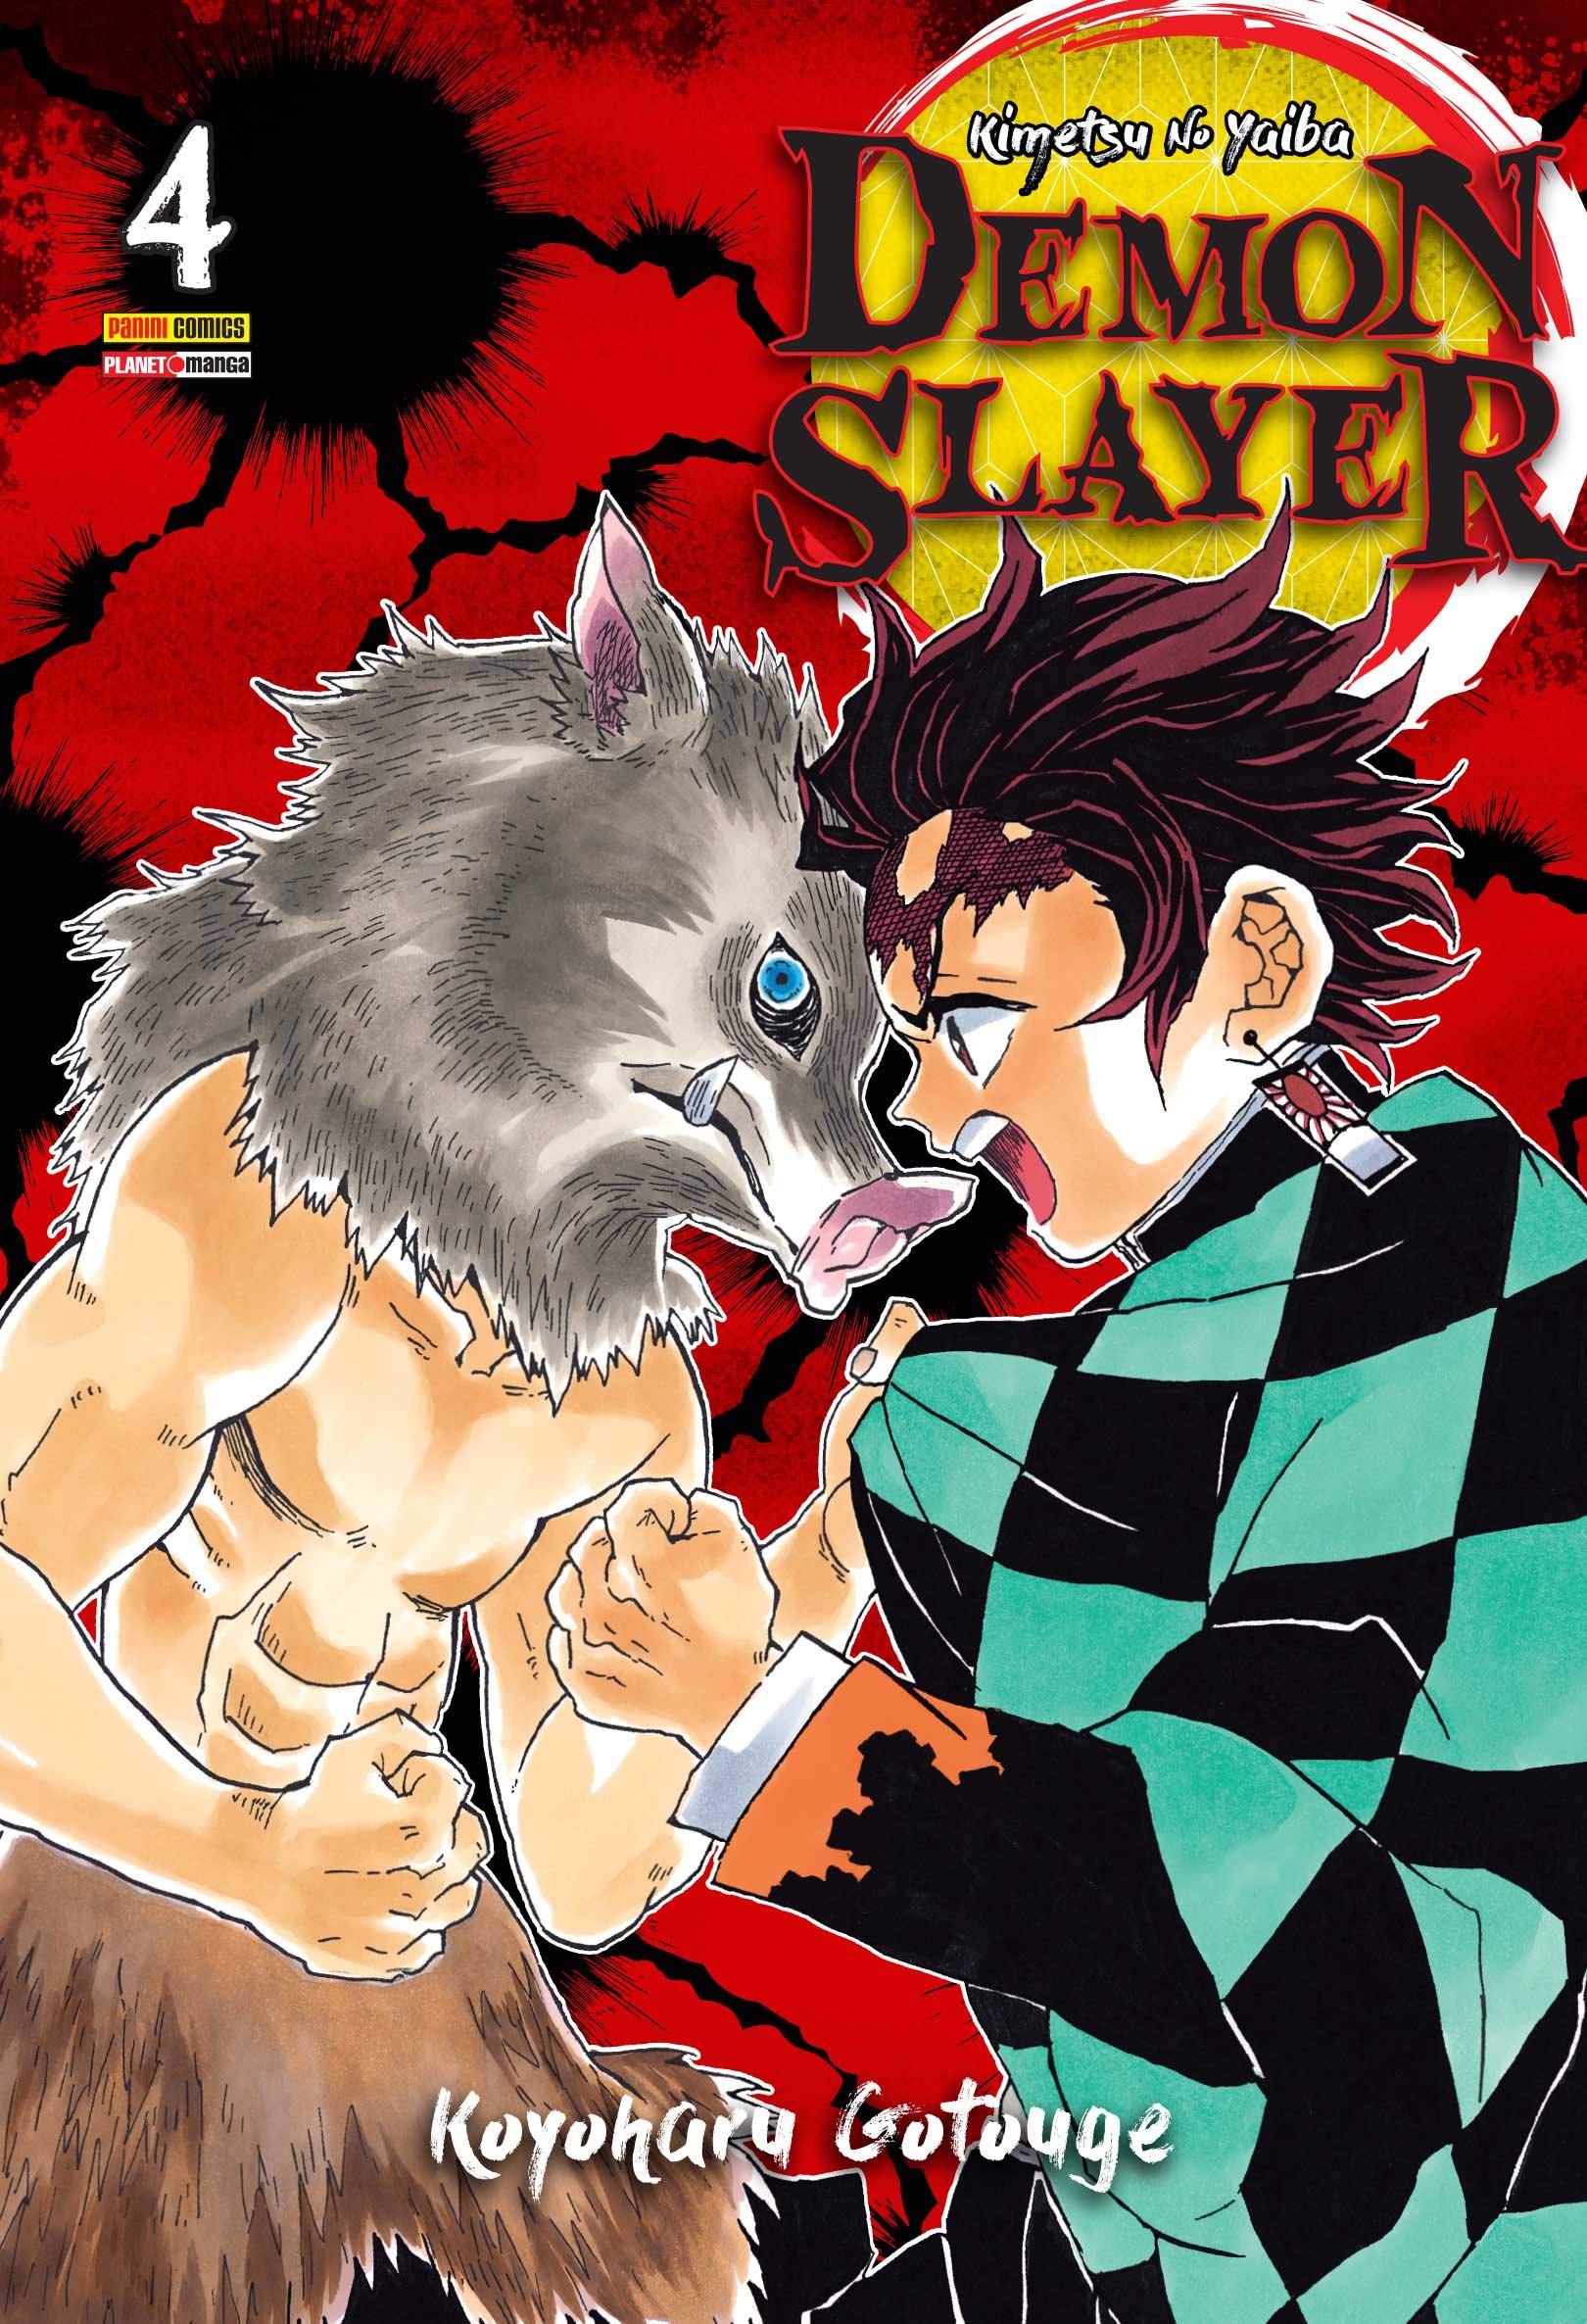 Livro - Demon Slayer - Kimetsu No Yaiba Vol. 3 em Promoção na